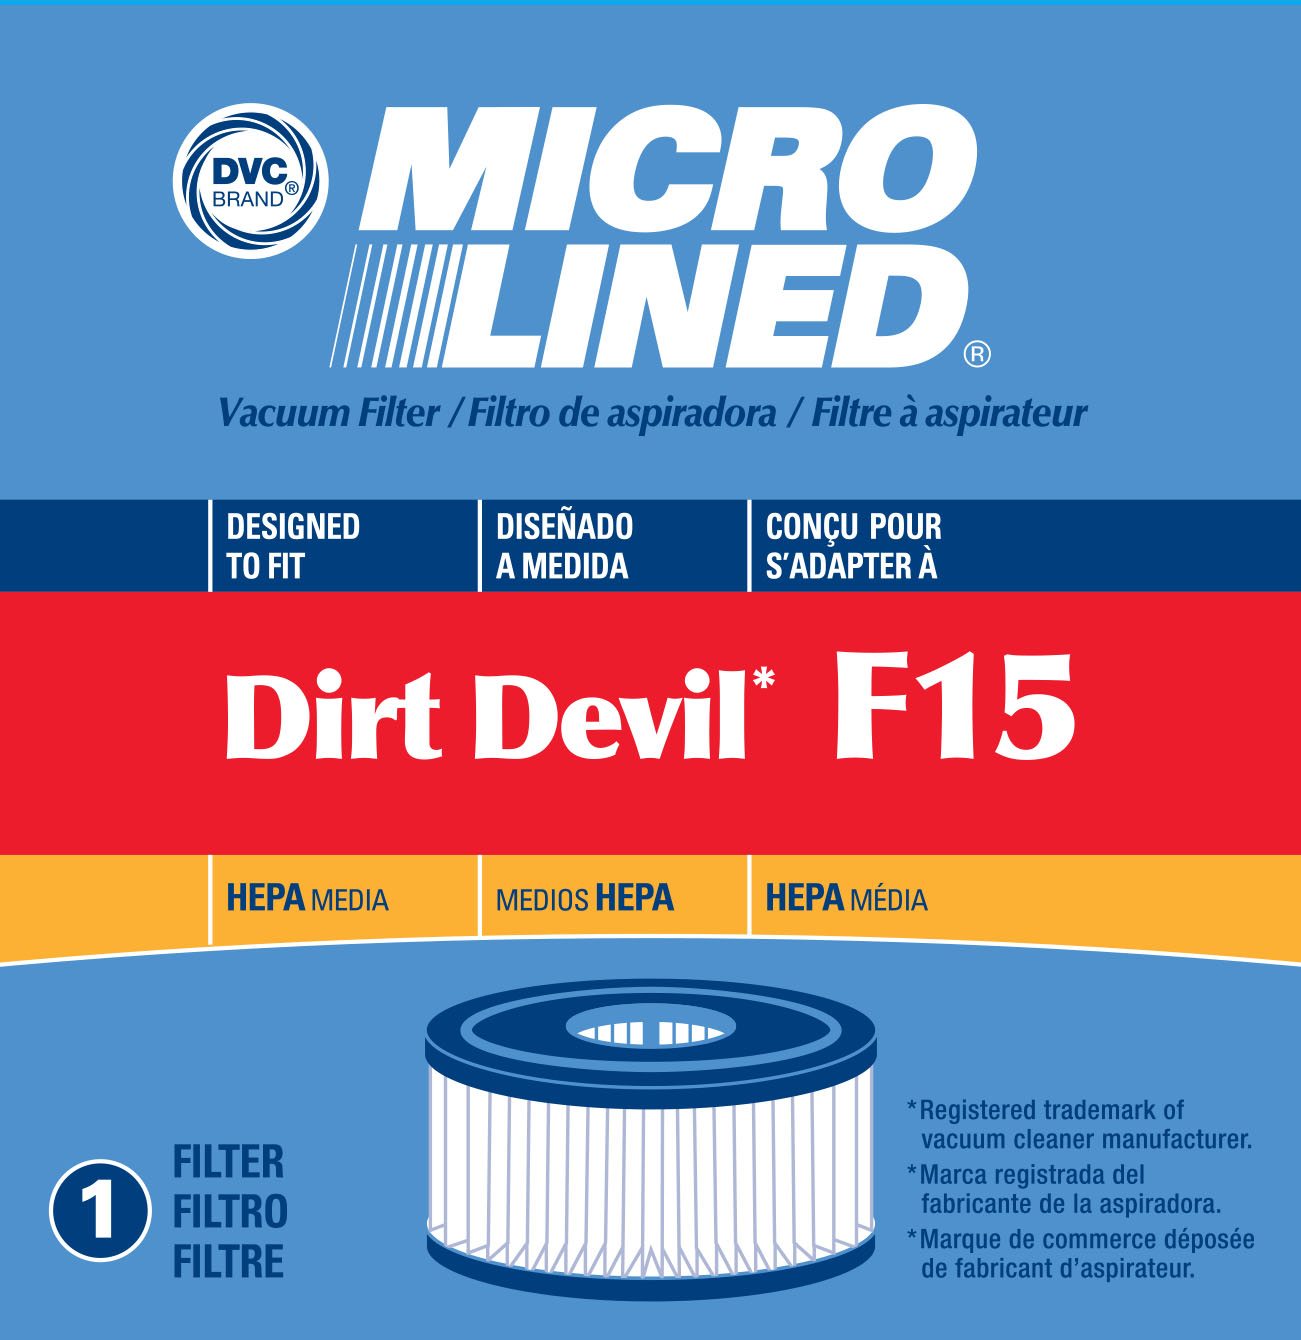 Dirt Devil HEPA Filter F15